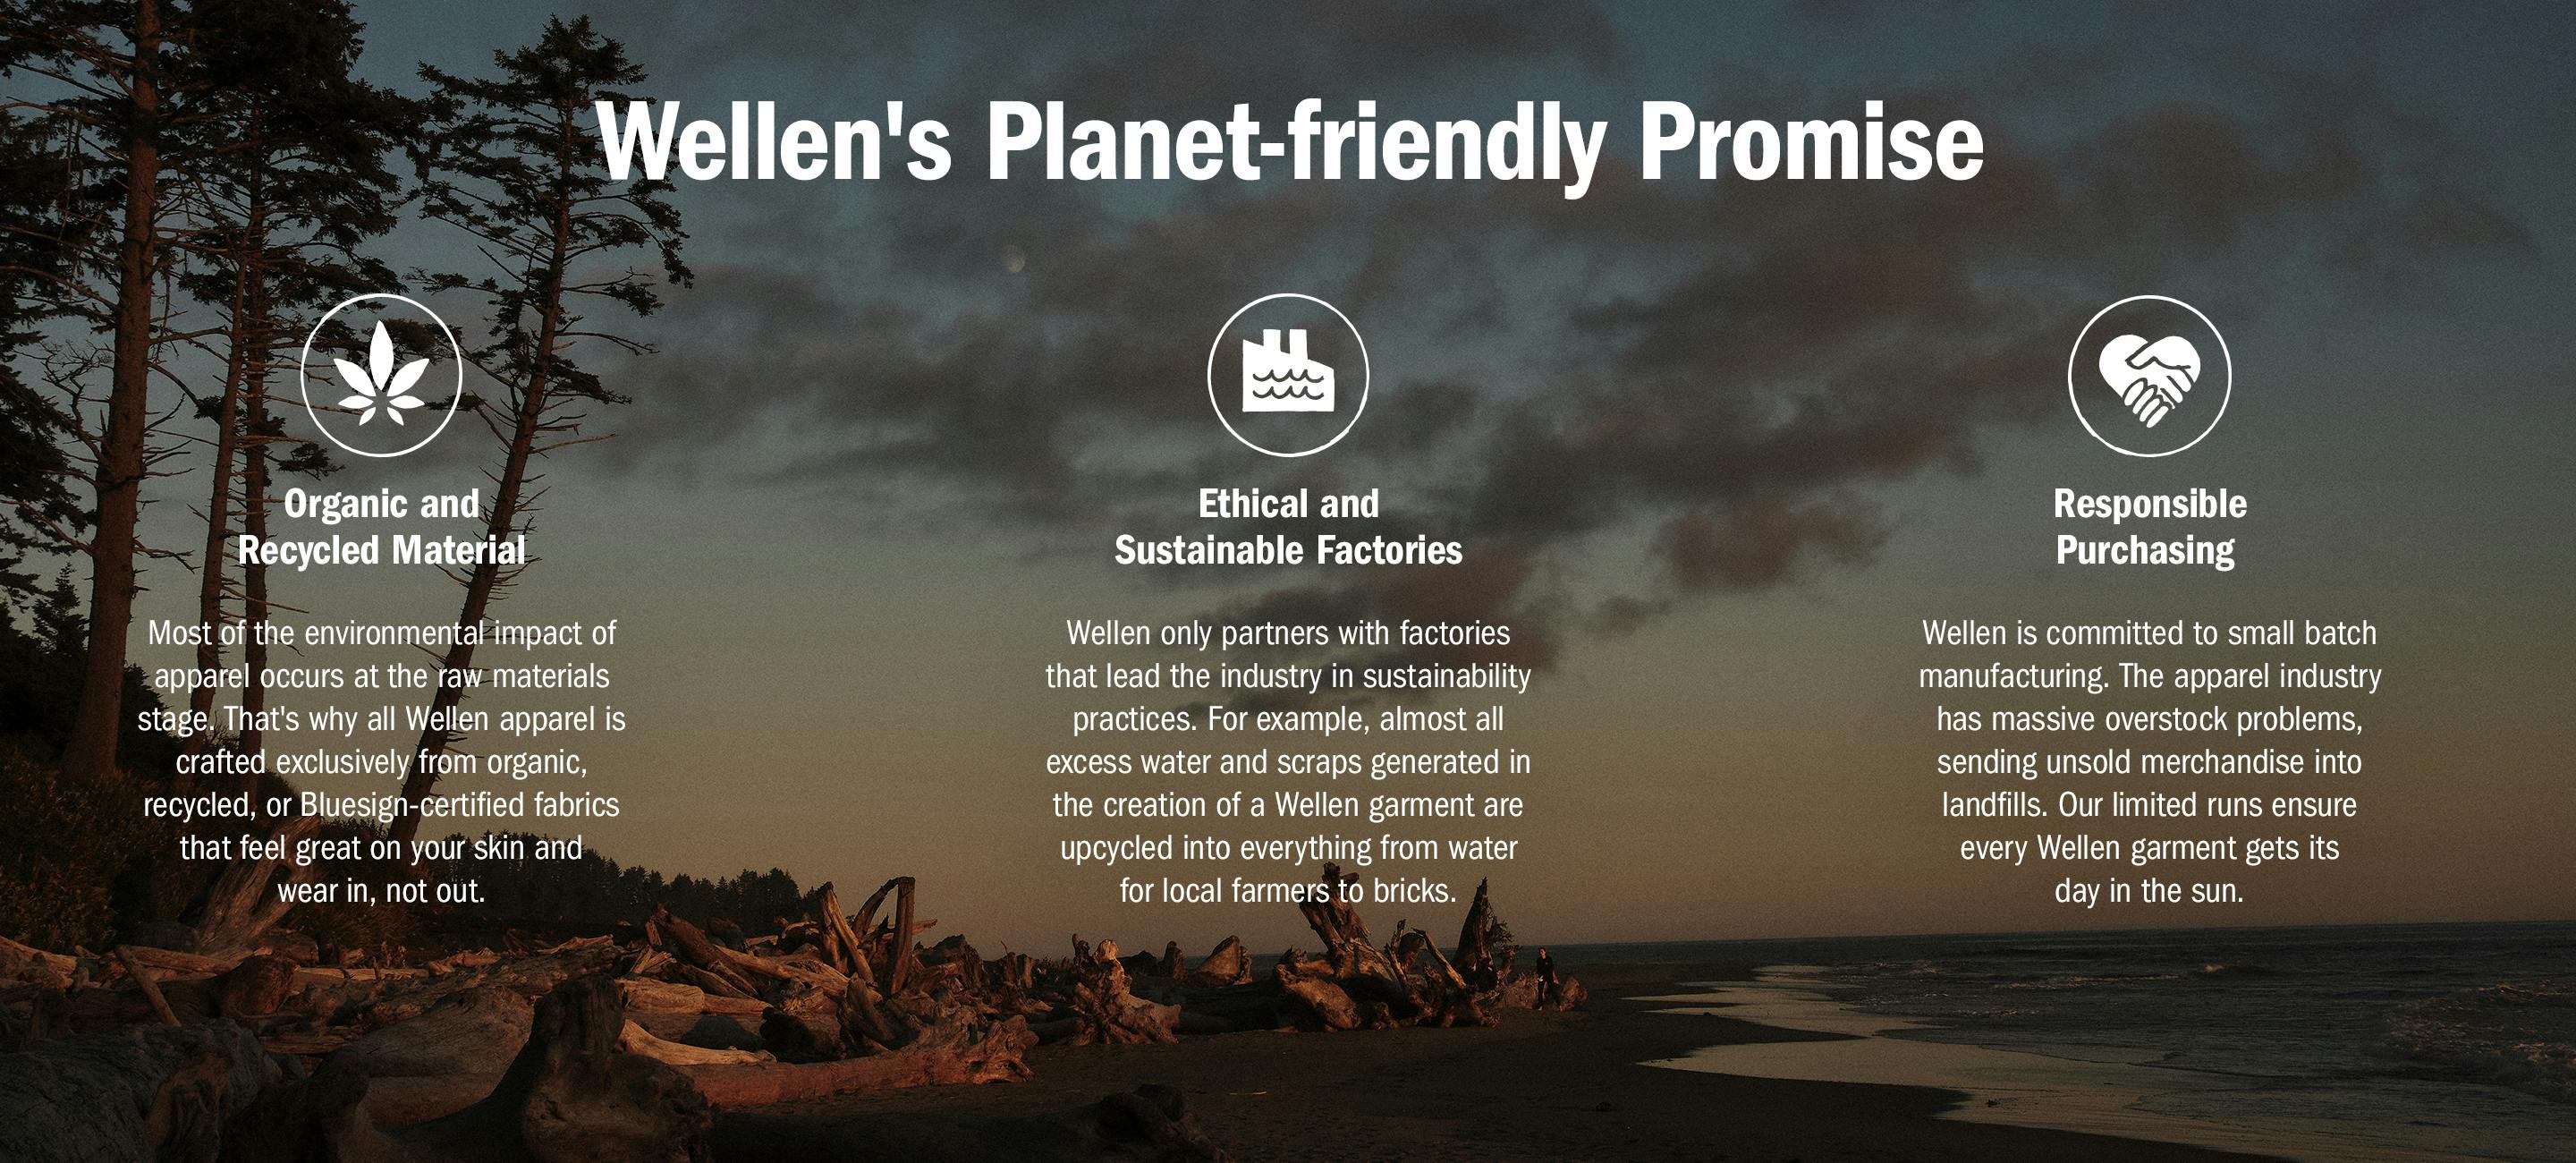 Wellen Planet-friendly Promise